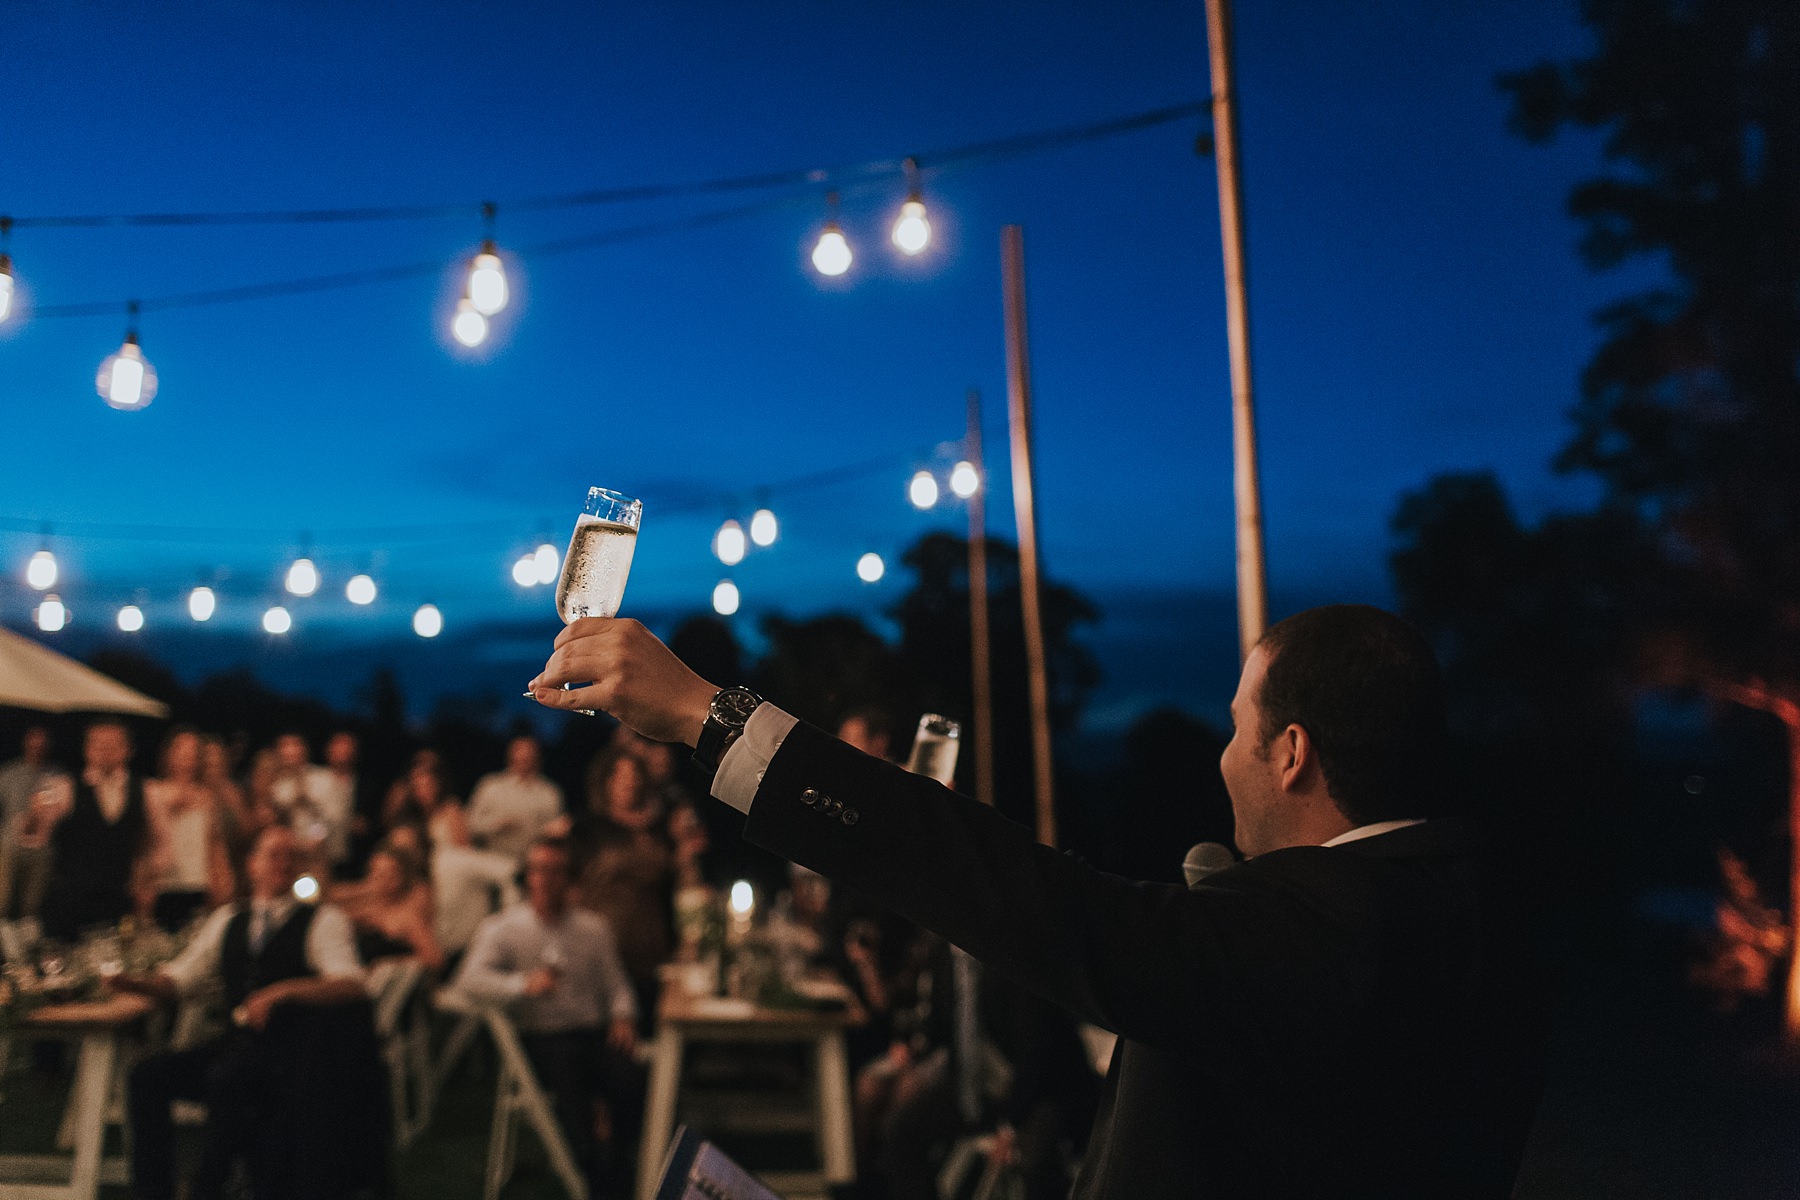 toast at wedding reception